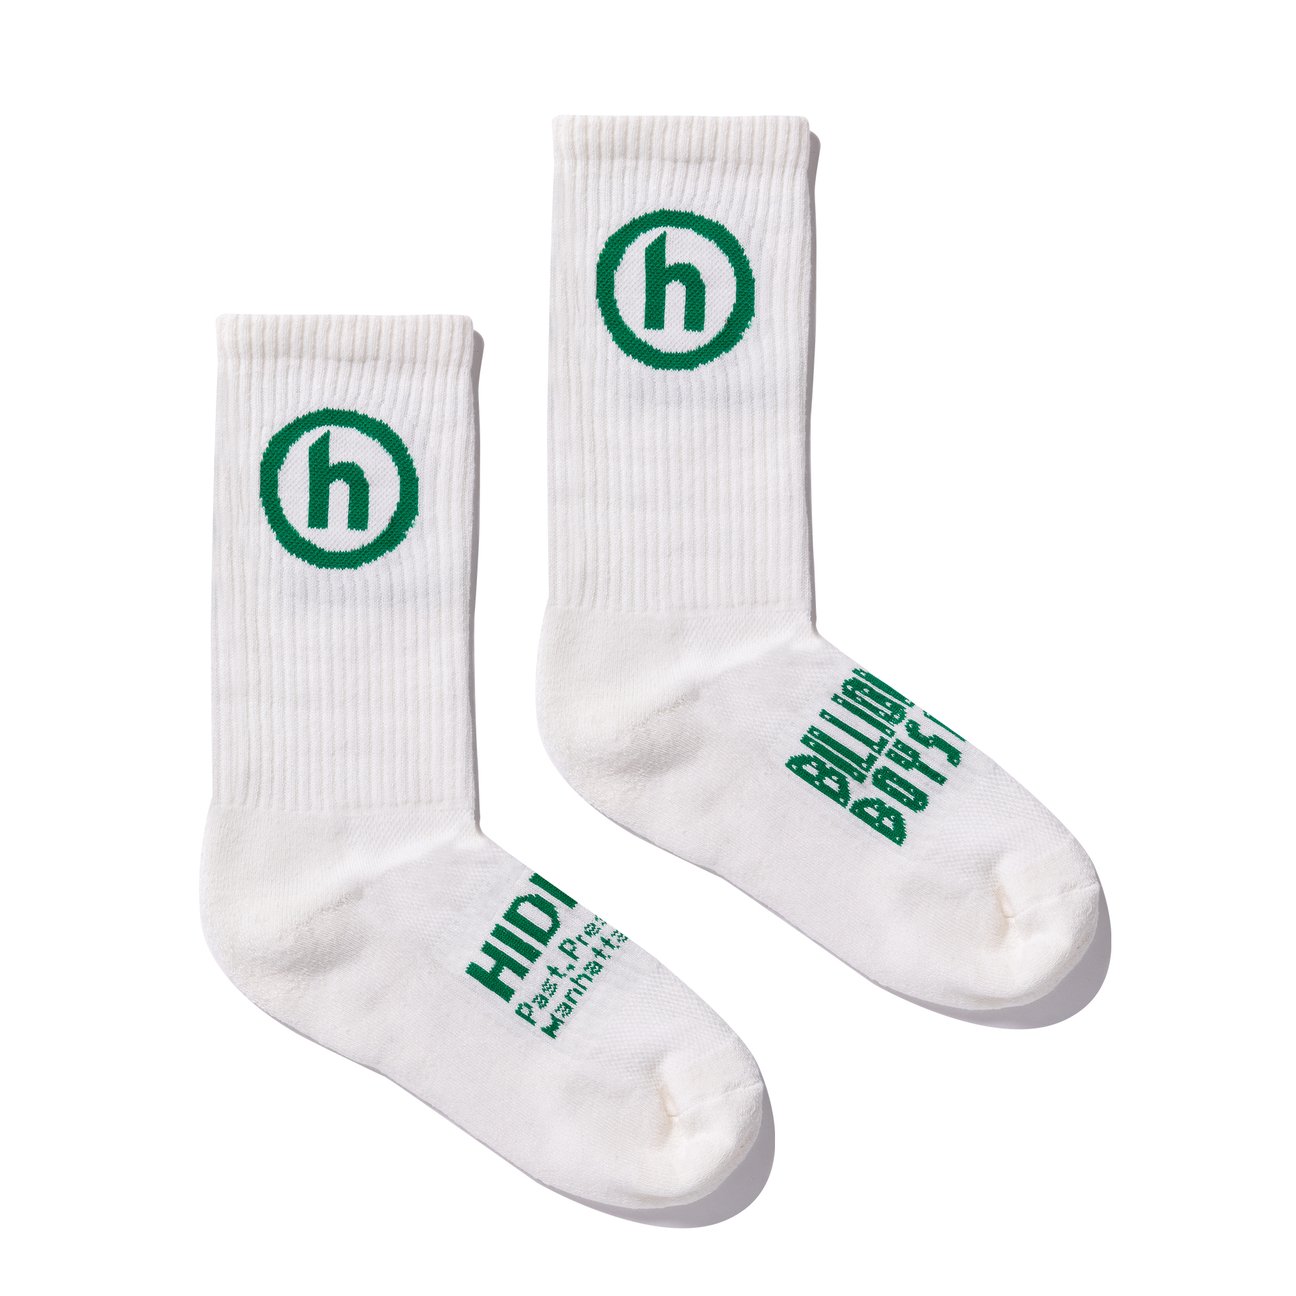 Hidden NY x Billionaire Boys Club Socks White/Green - FW20 - JP